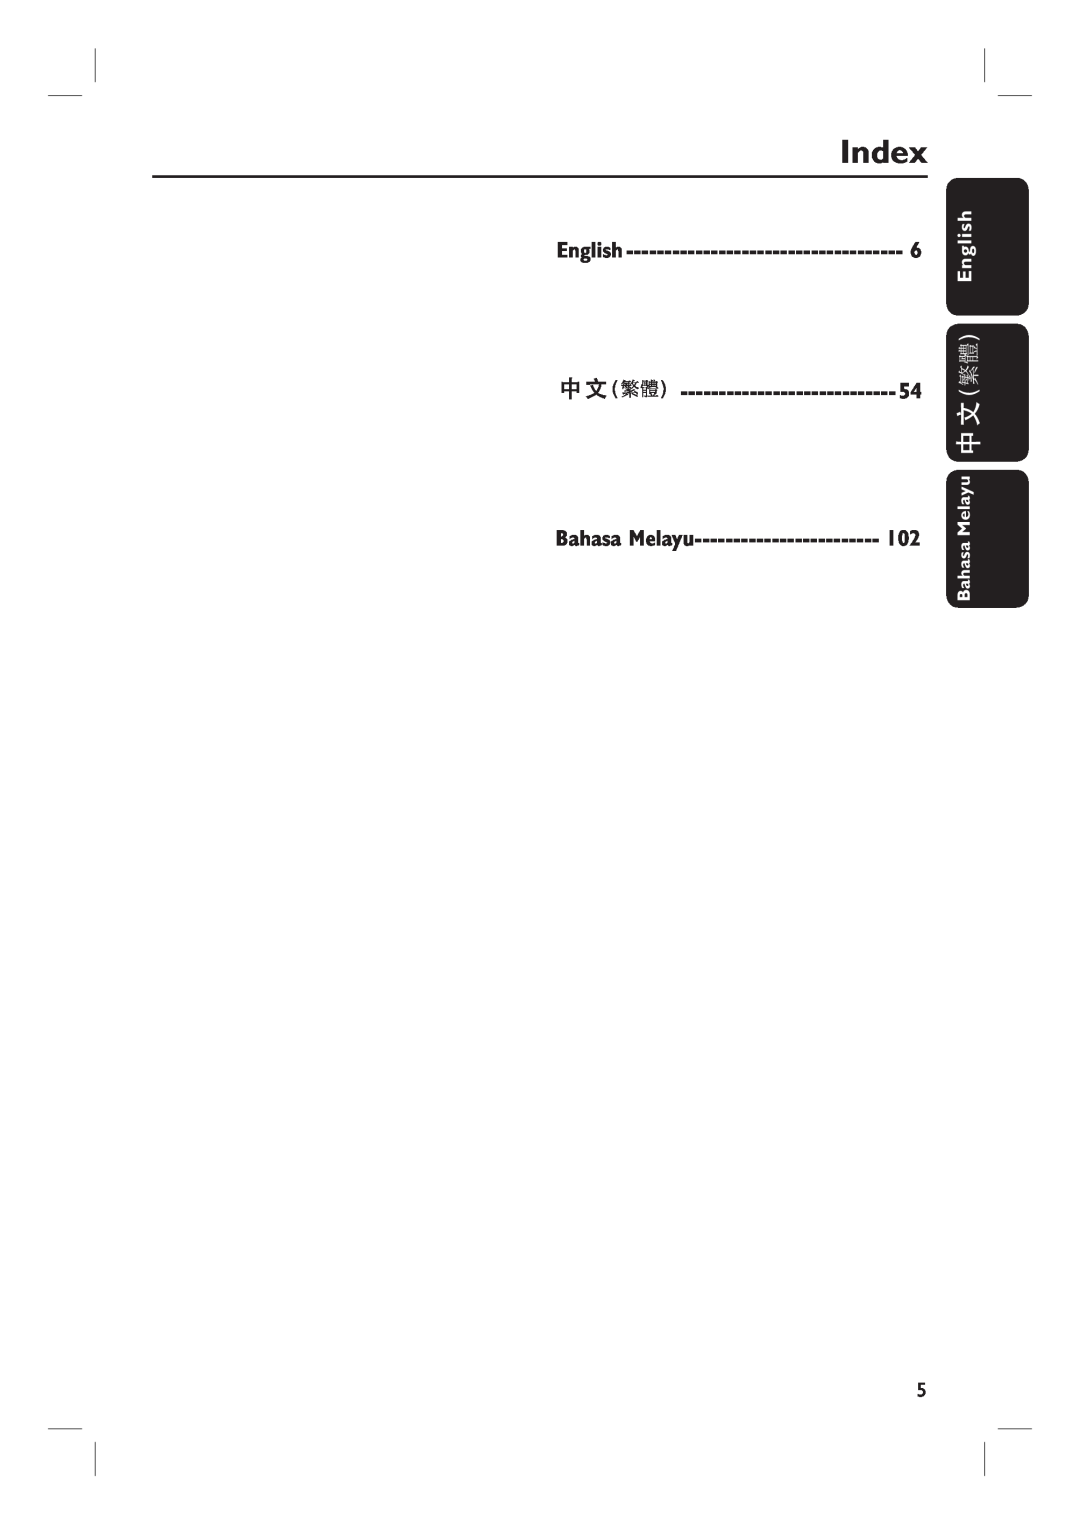 Philips HTS3455 user manual Index, English, Bahasa Melayu 